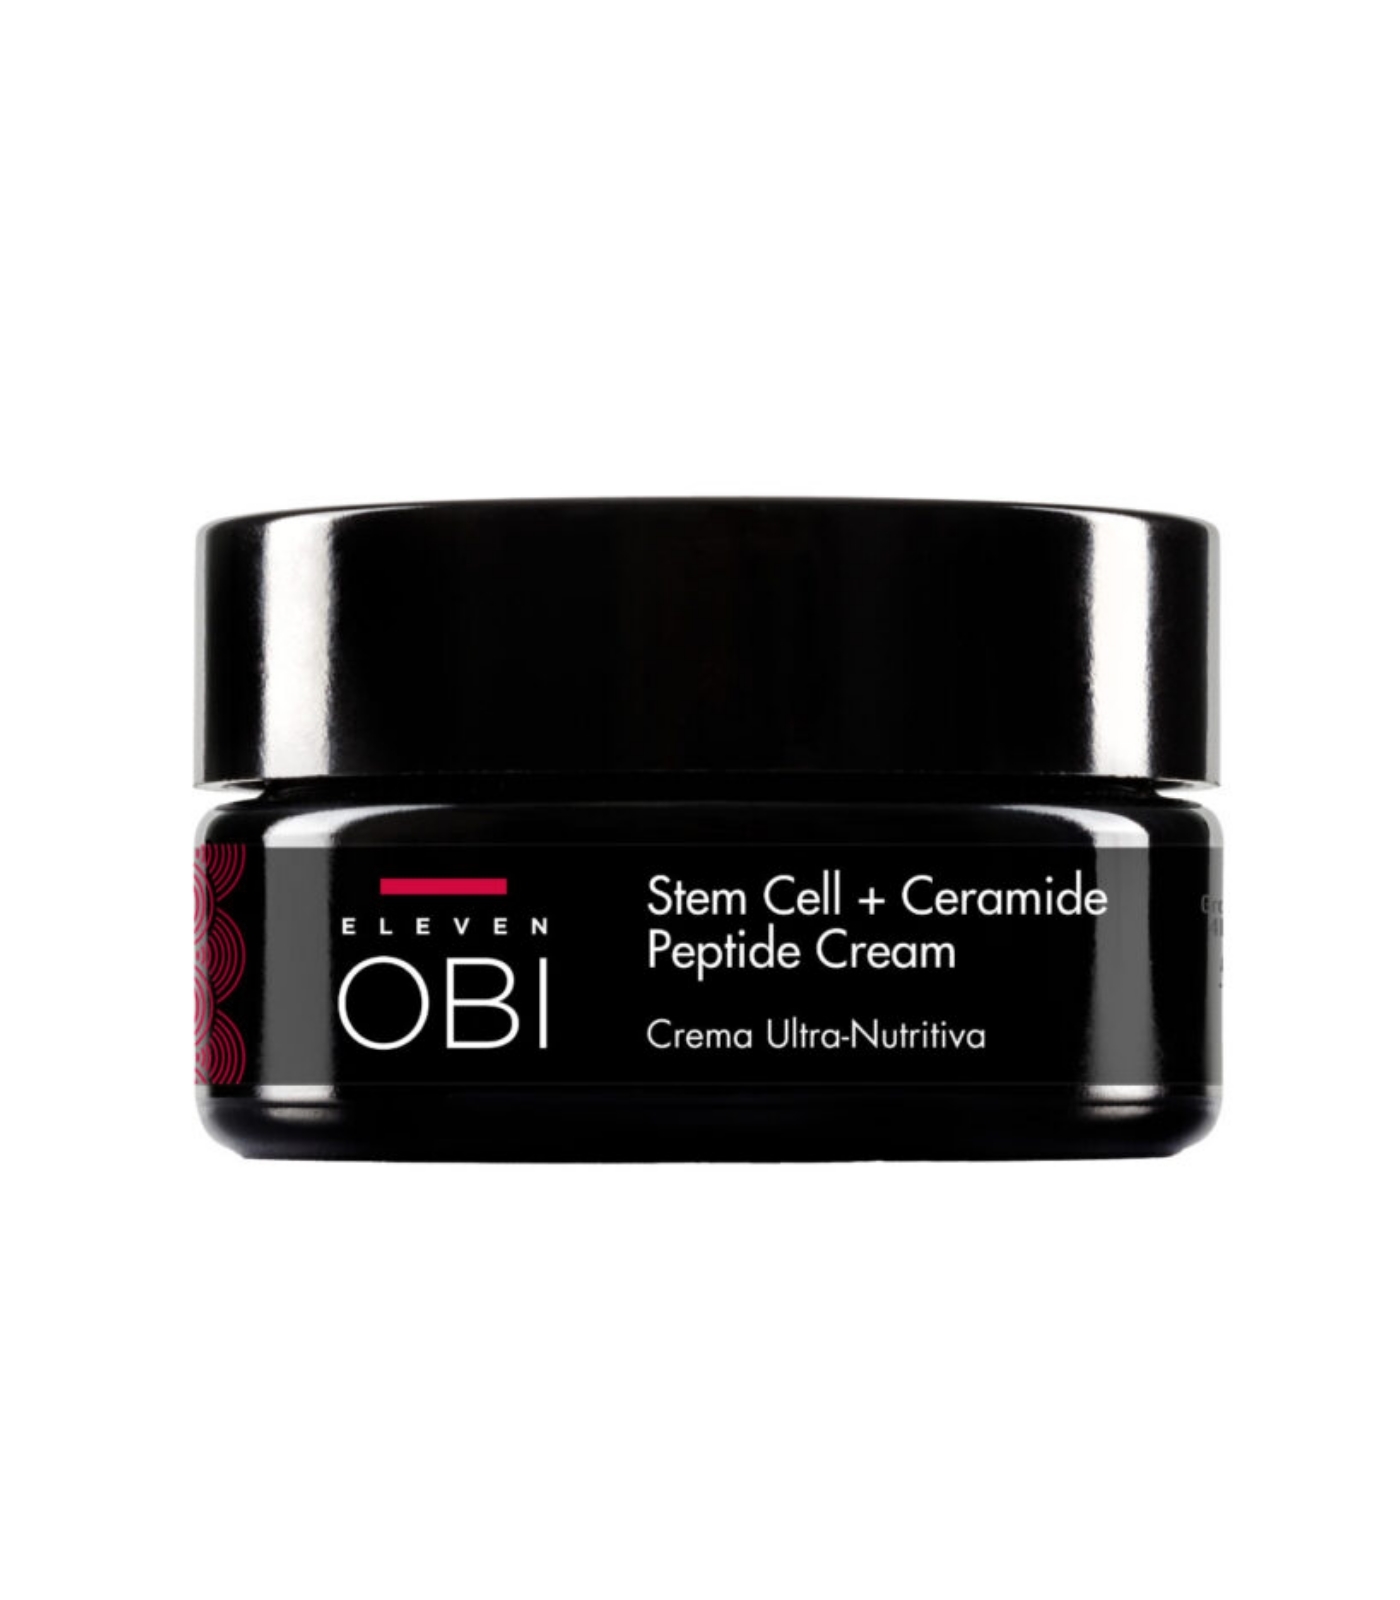 Crema antiarrugas nutritiva Stem Cell + Ceramide Peptide Cream de Eleven Obi.